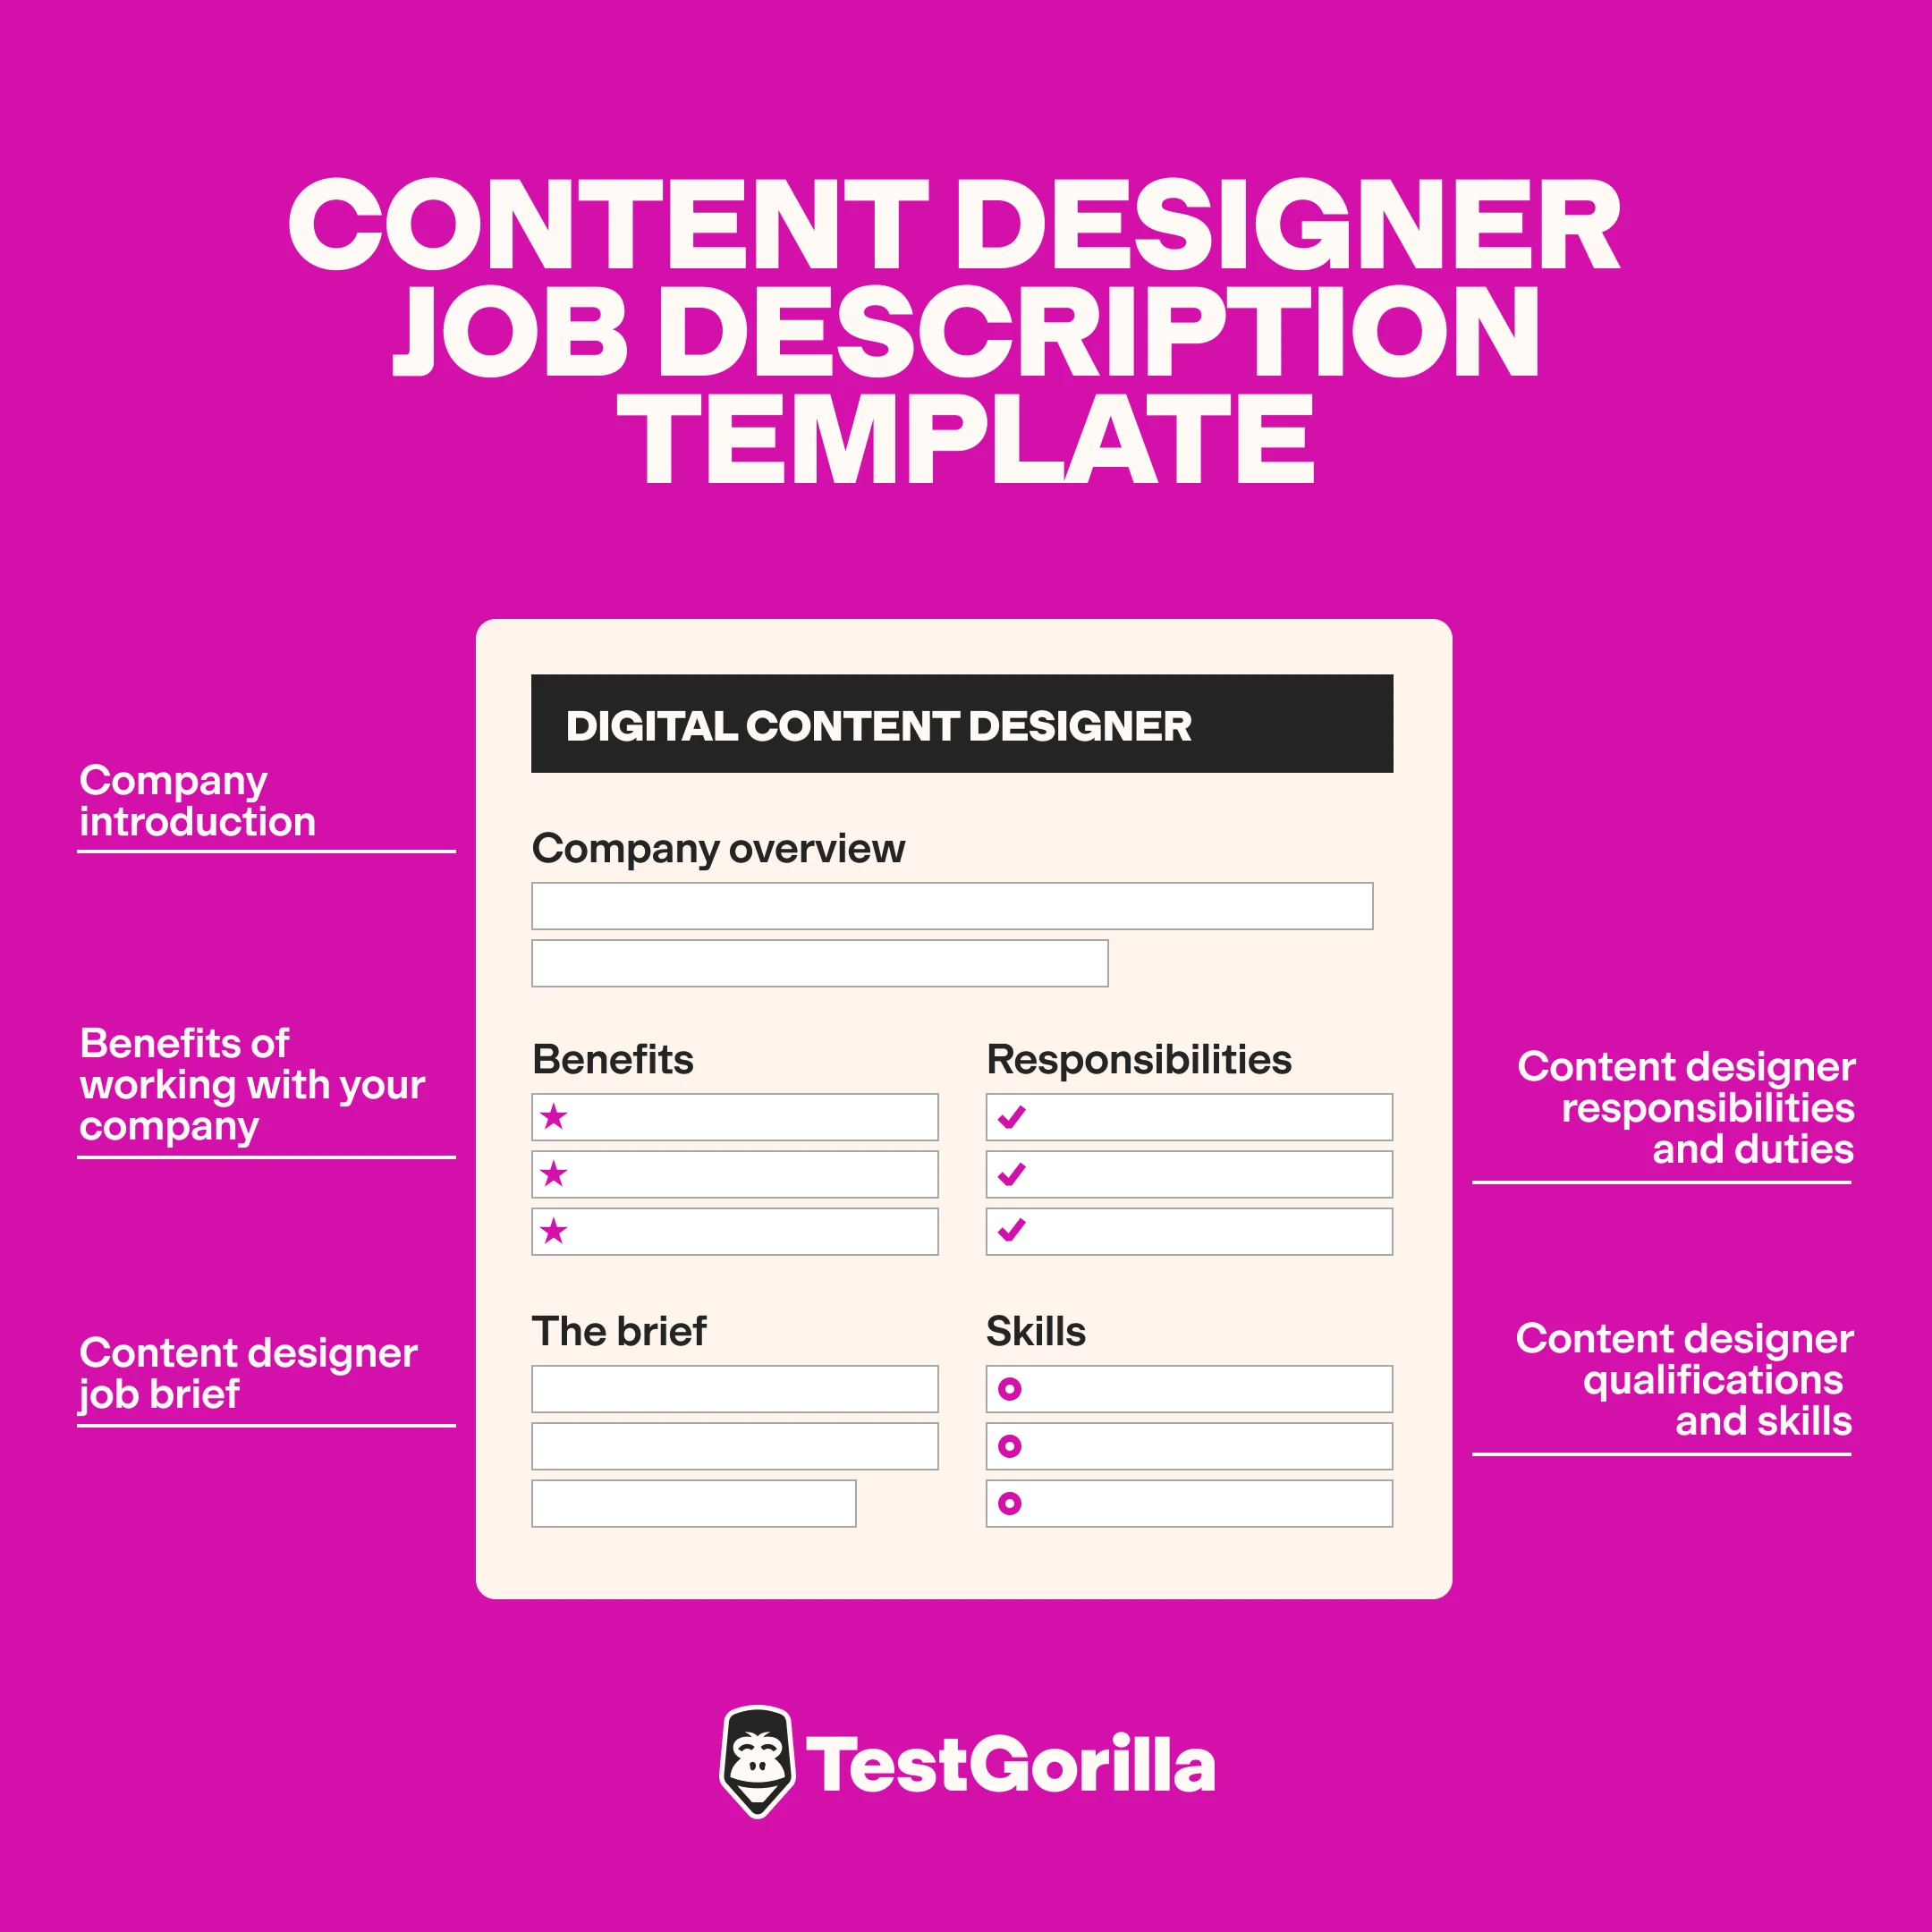 Content designer job description template